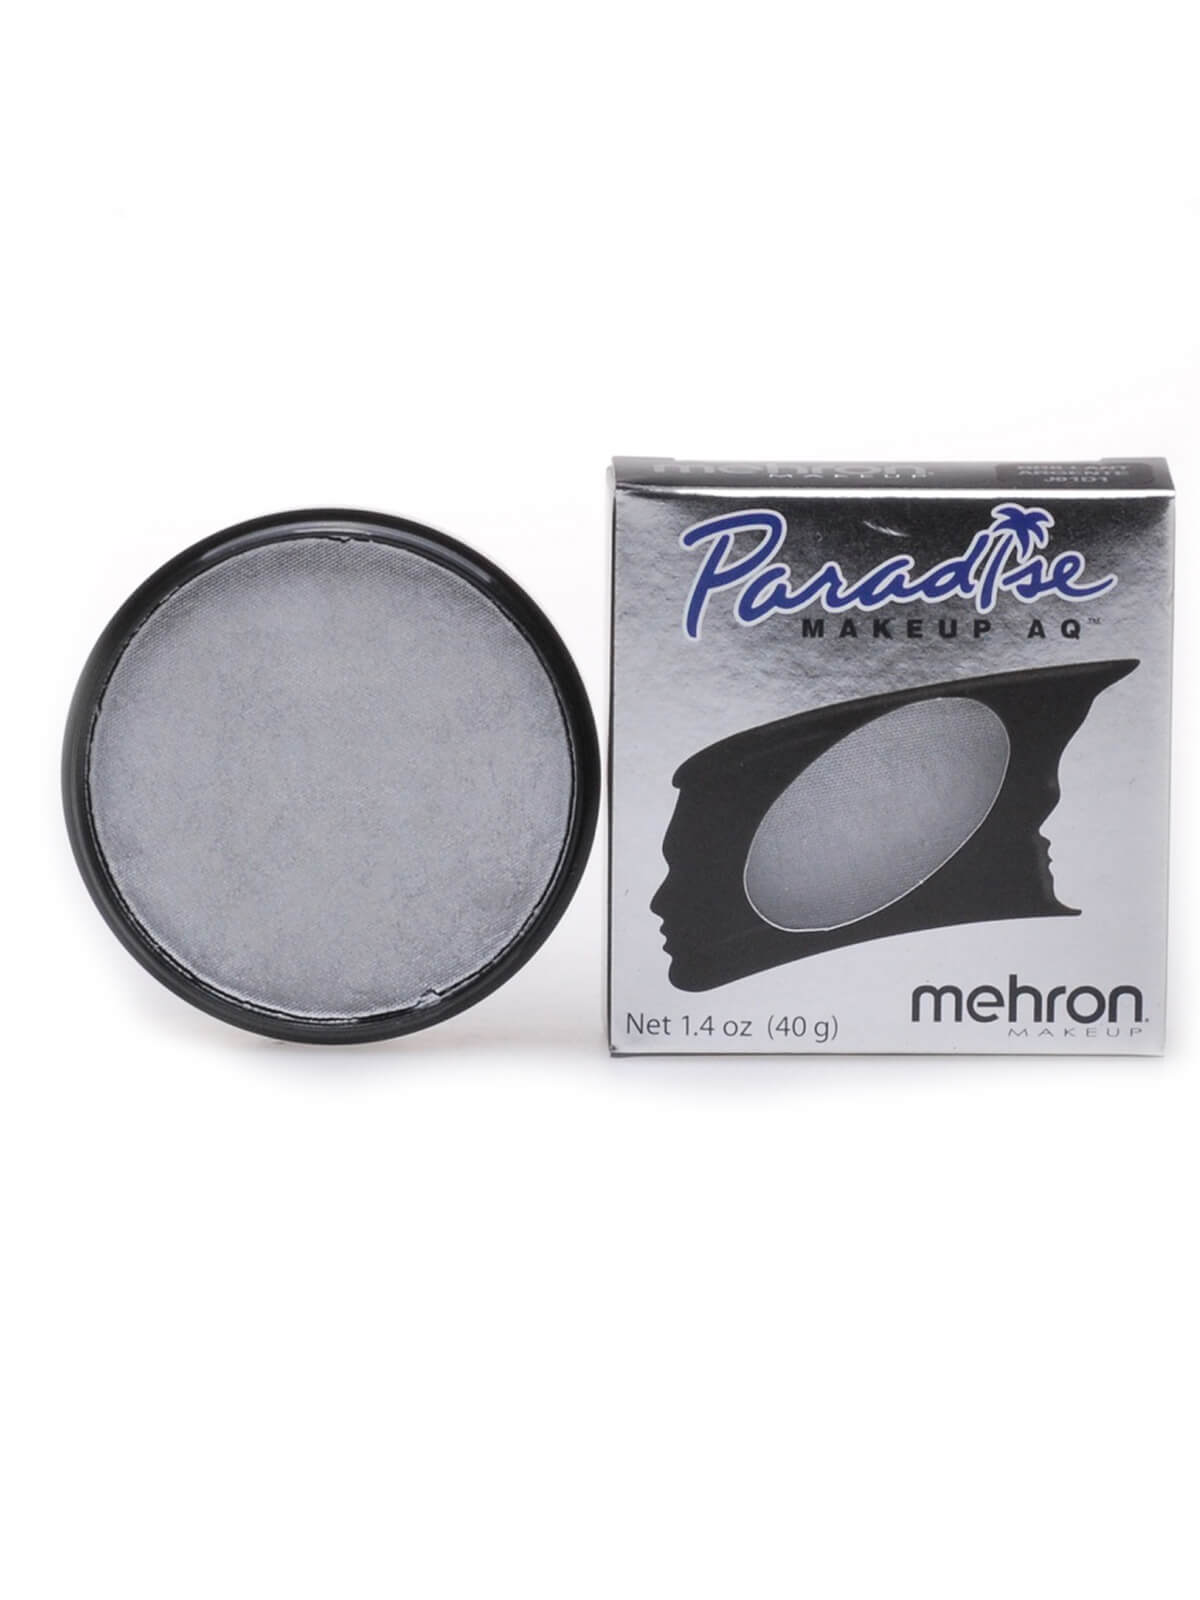 Mehron Paradise Makeup AQ - Brillant  - Argente-Silver